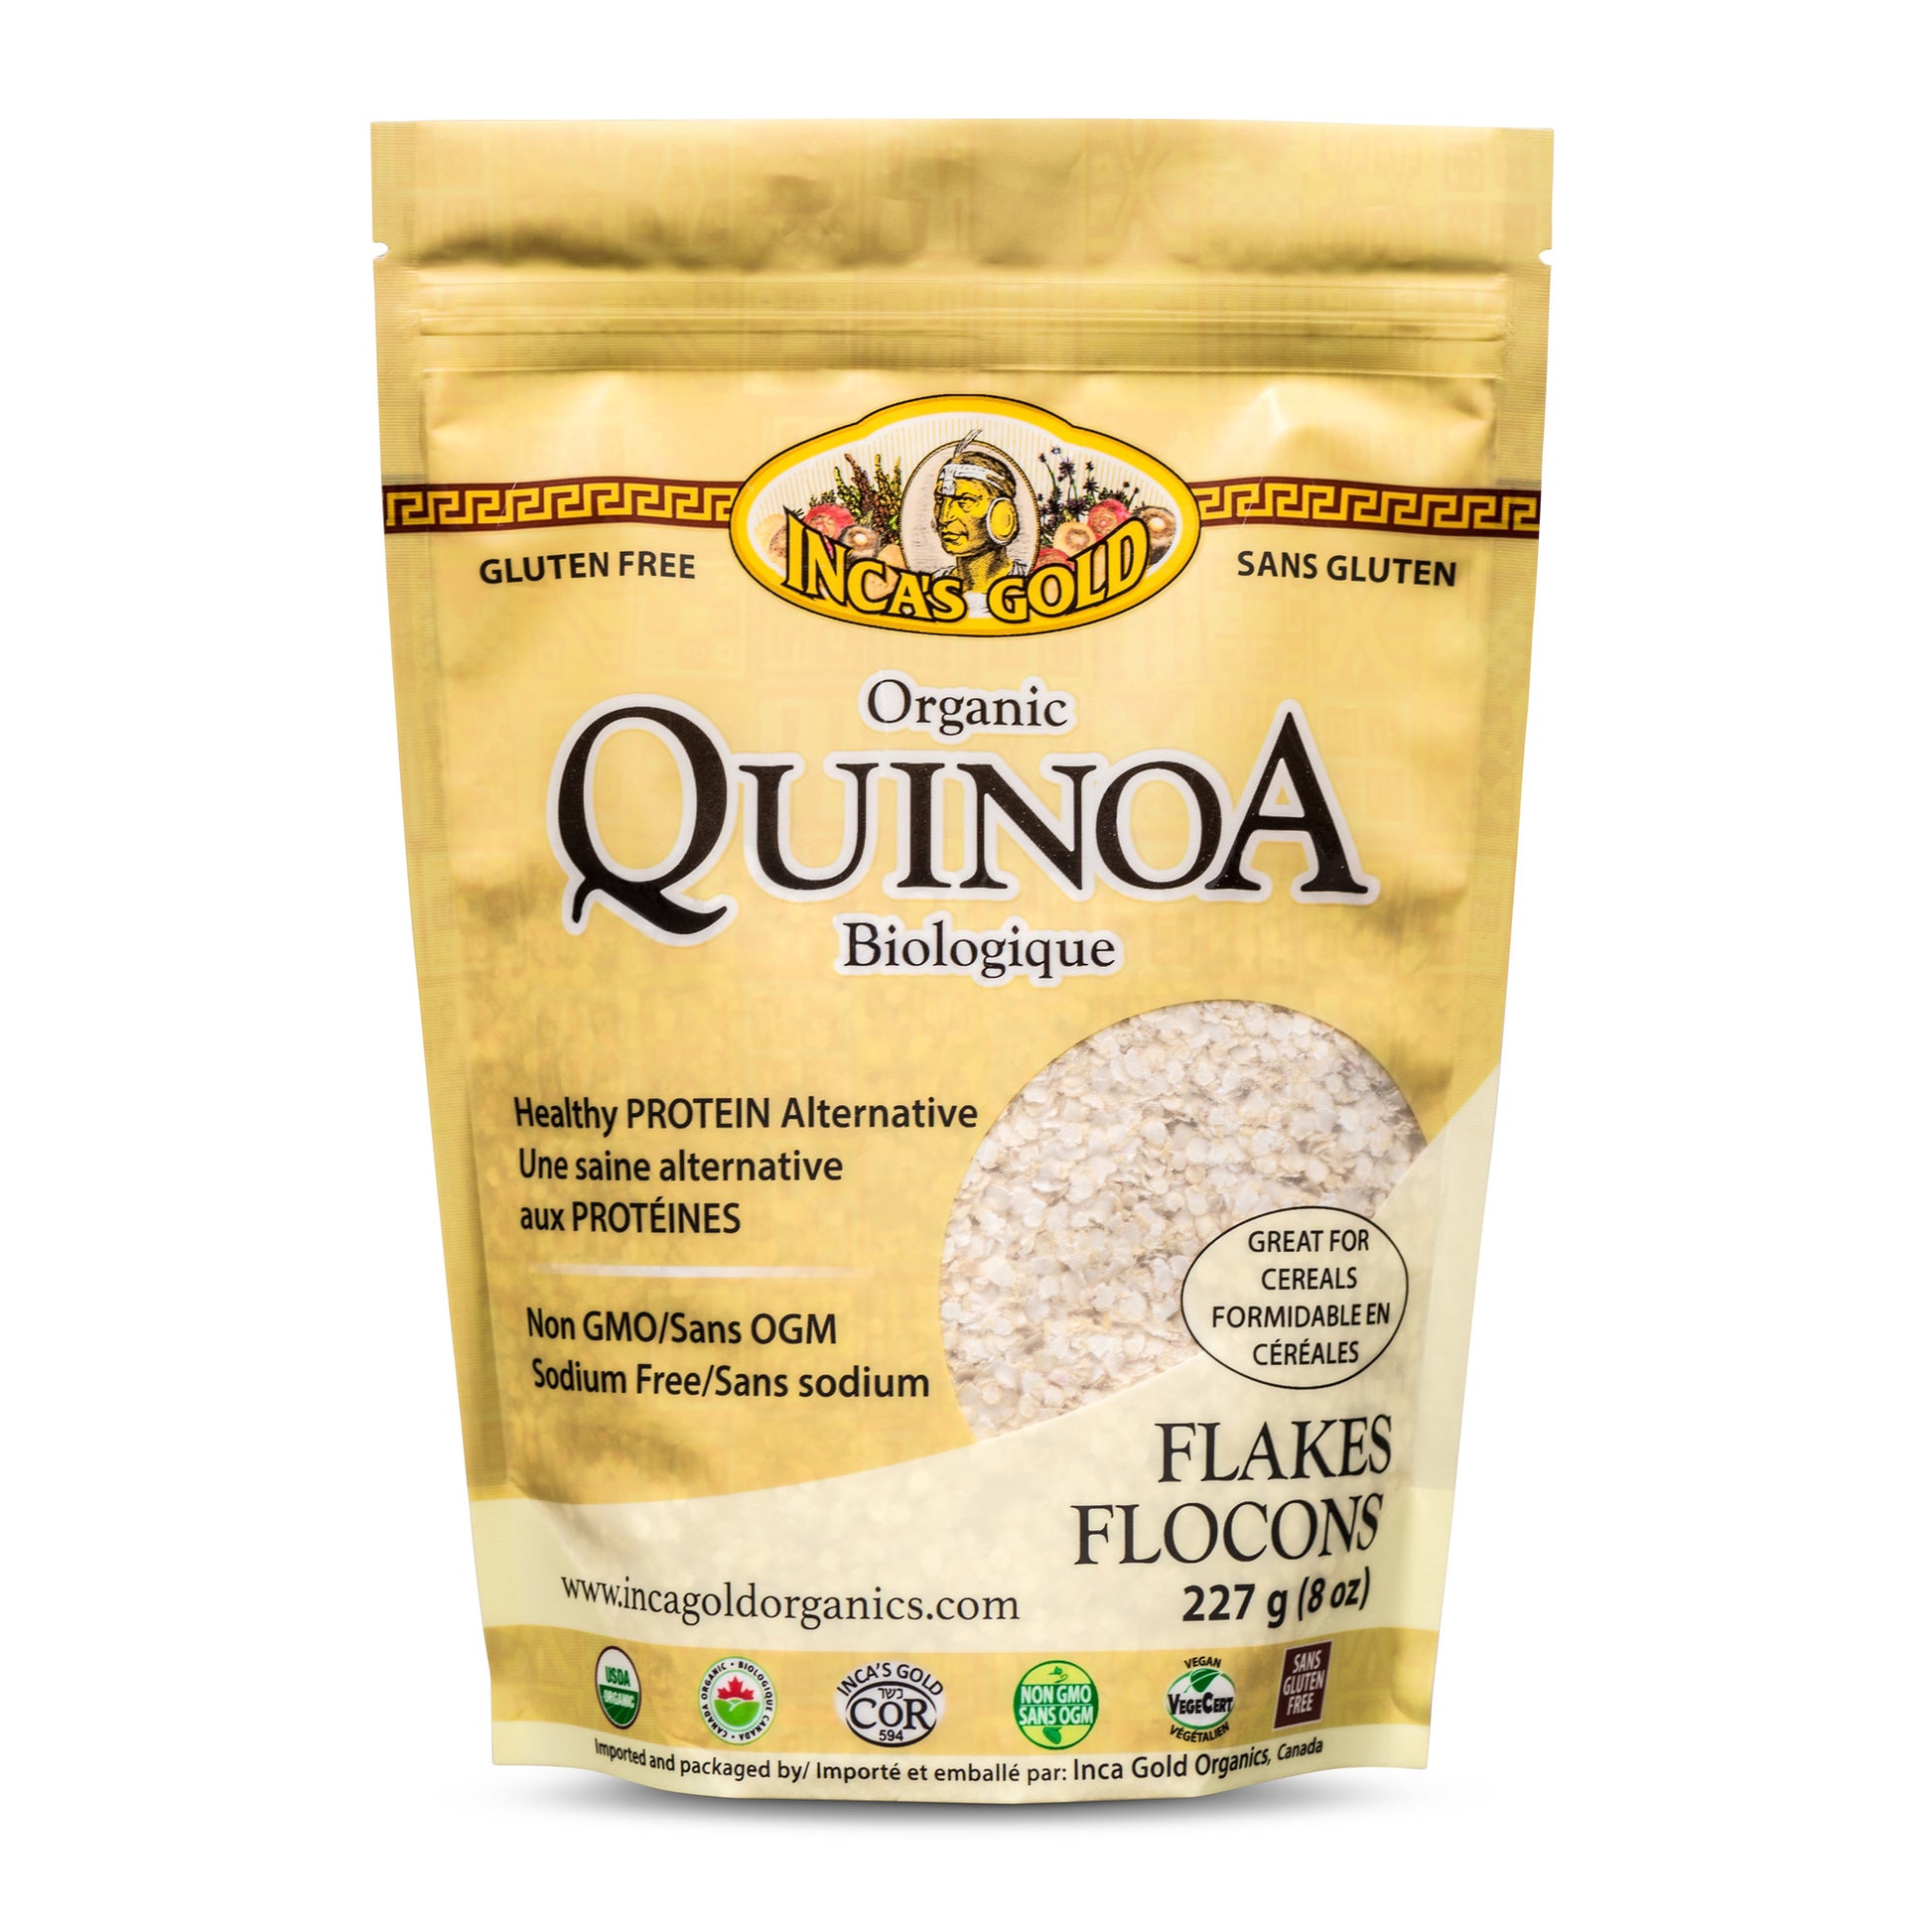 INCA'S GOLD Organic Quinoa Flakes 227g